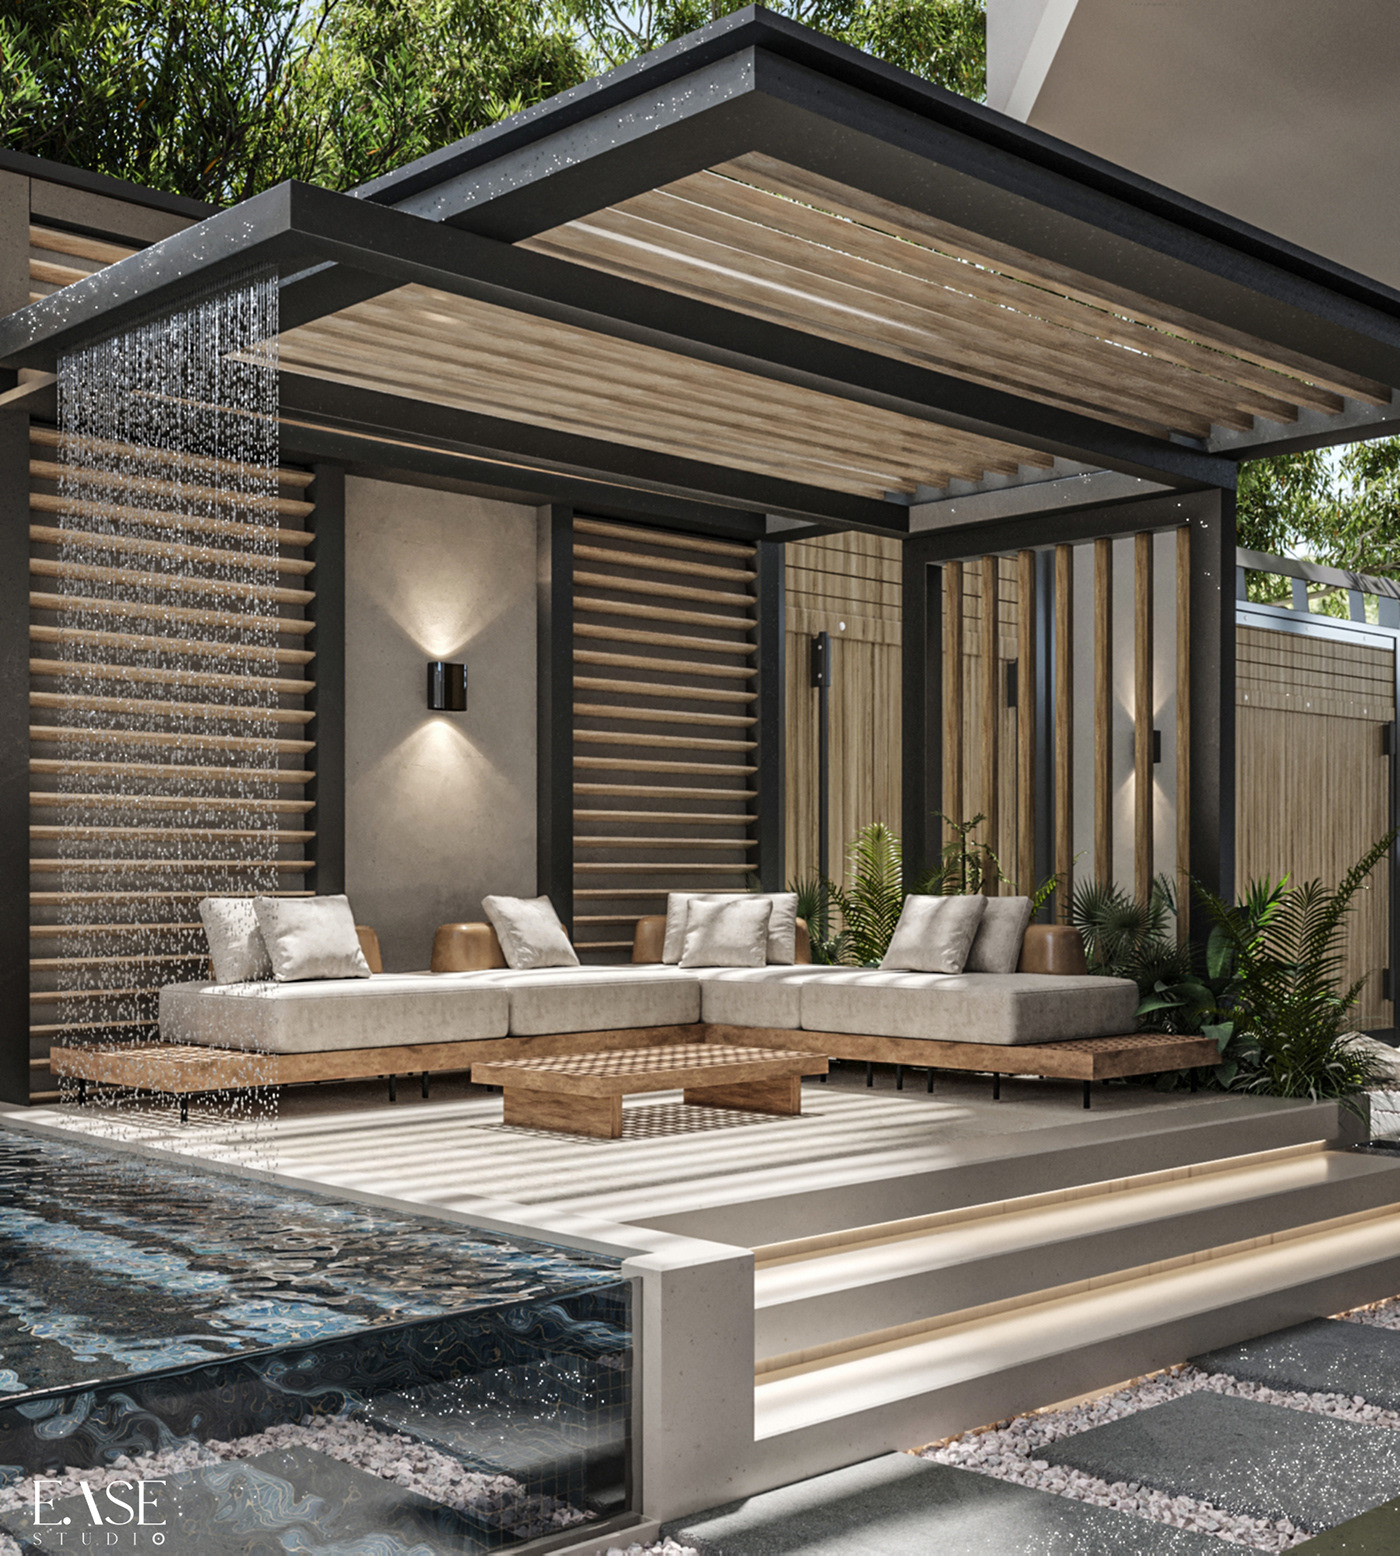 3ds max architecture corona exterior exterior design Landscape modern Render villa design visualization